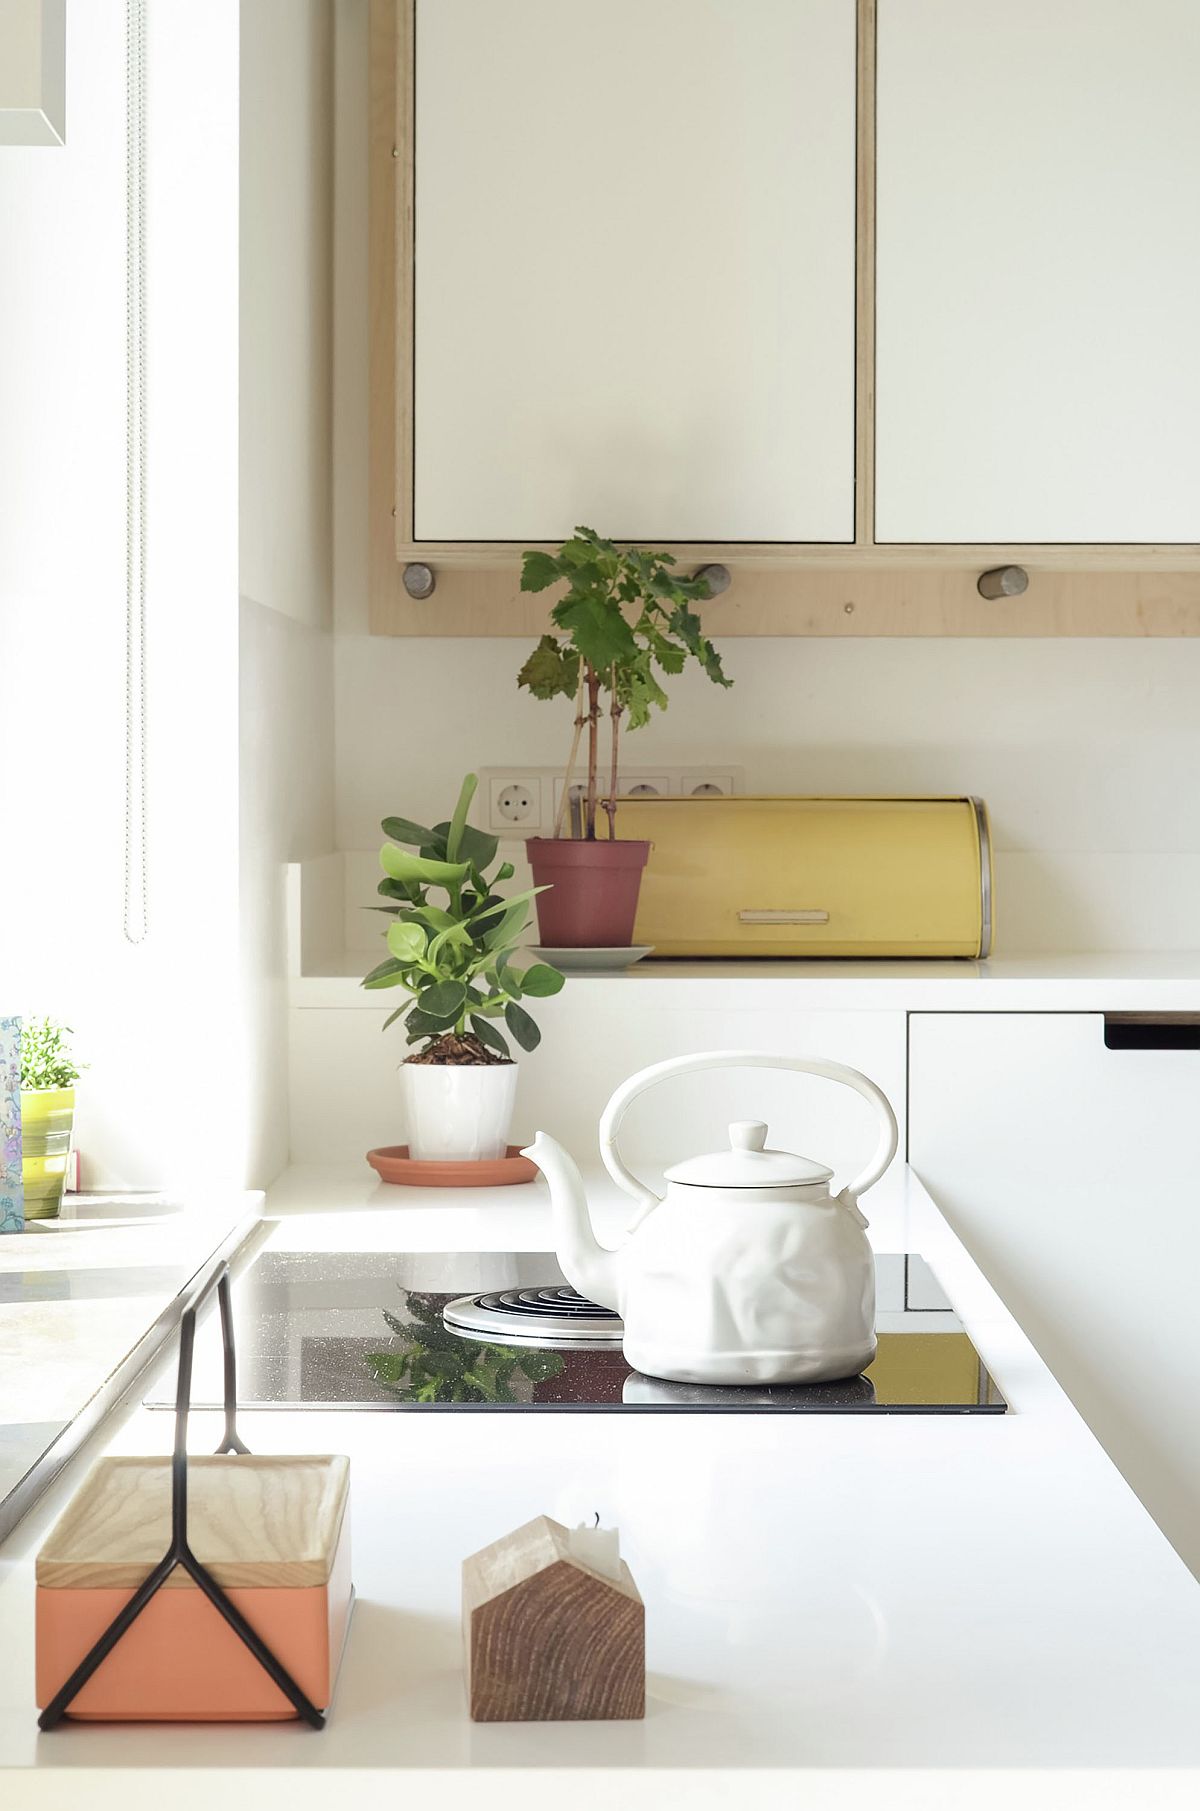 Elegant and functional kitchen worktops